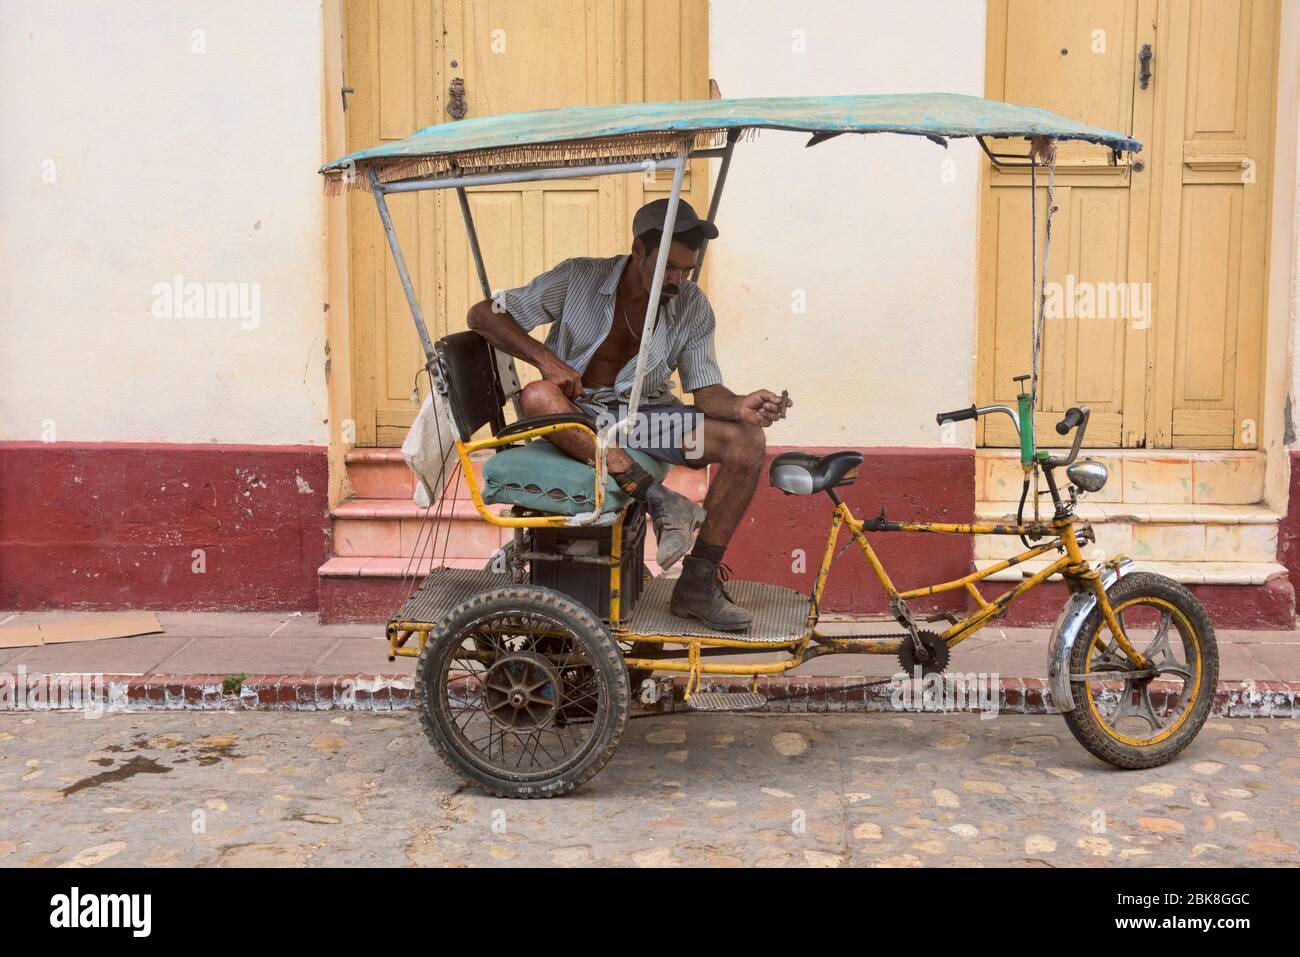 Bici taxi waiting in UNESCO World Heritage Trinidad, Cuba Stock Photo -  Alamy